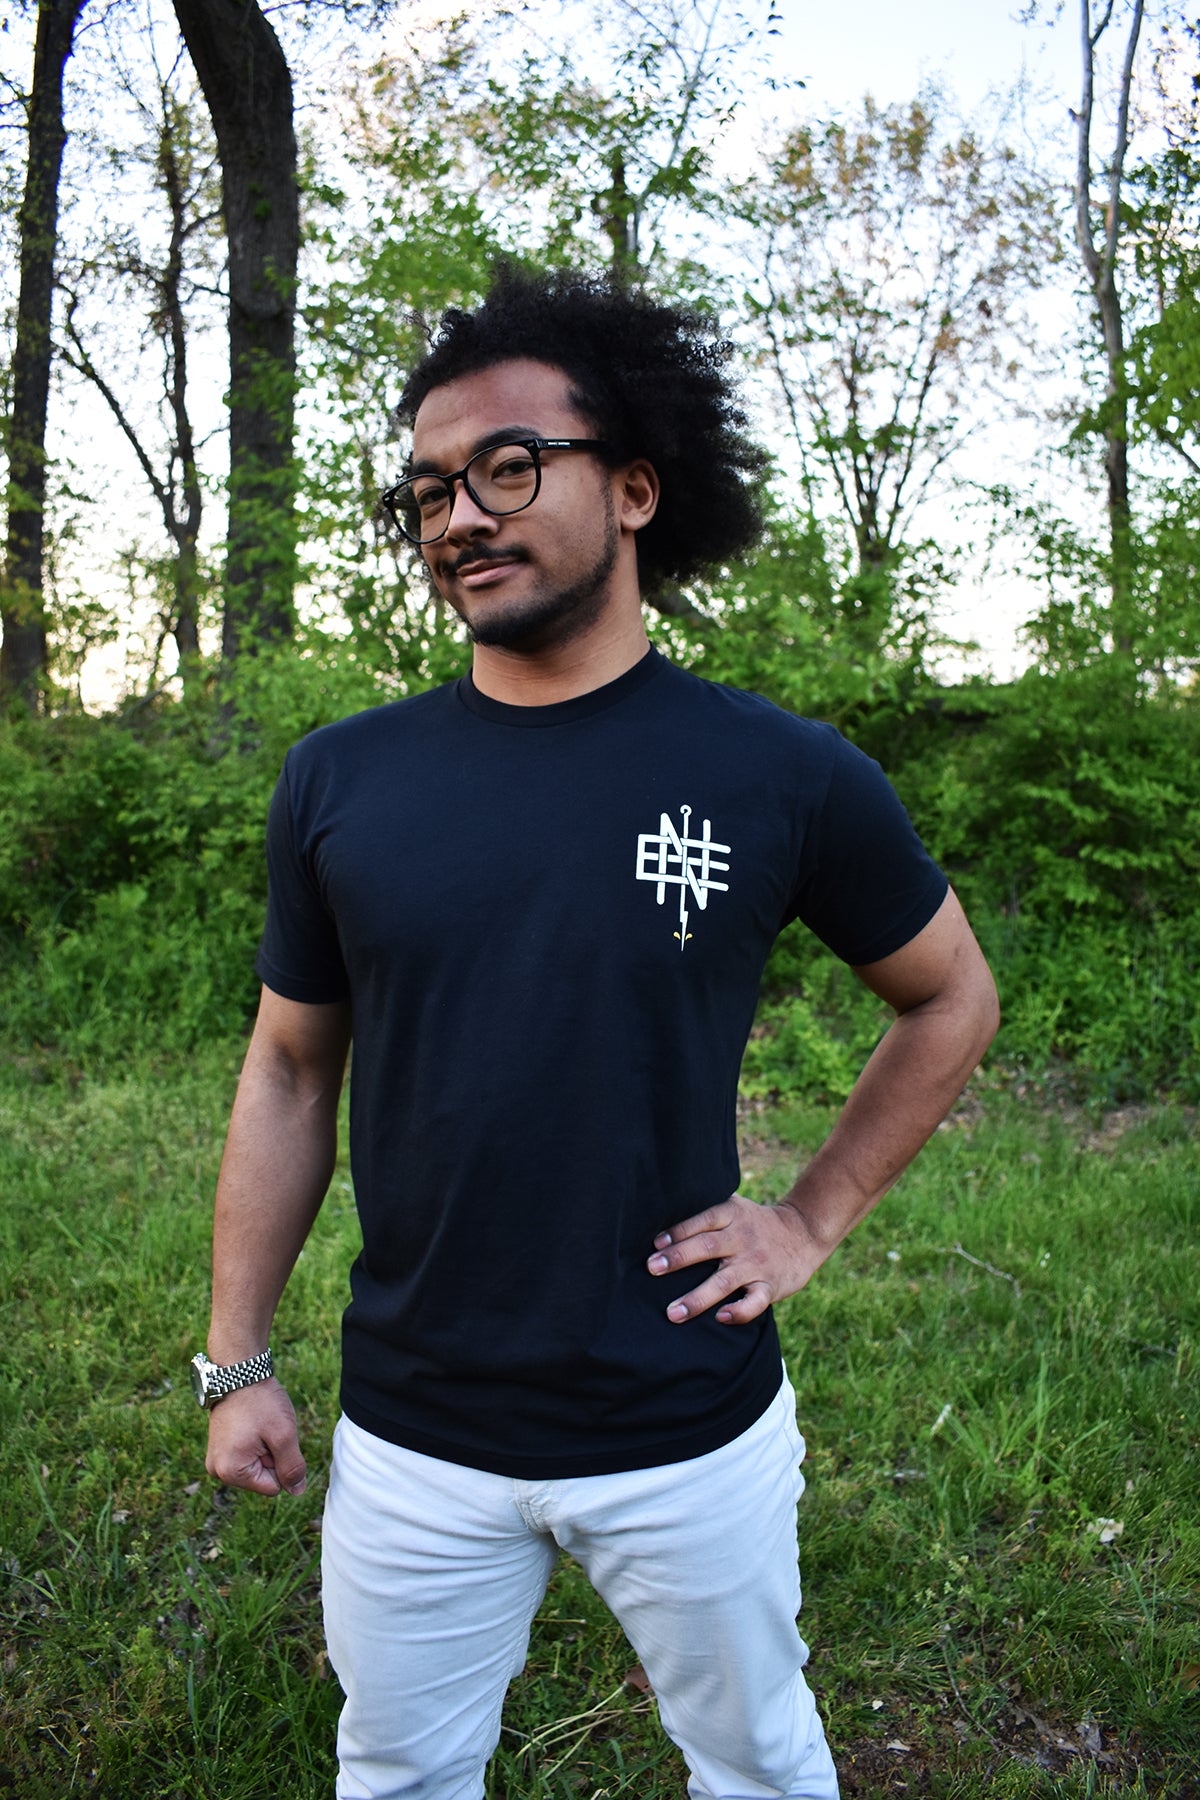 Black tshirt on man for design containing black, shirt, and man